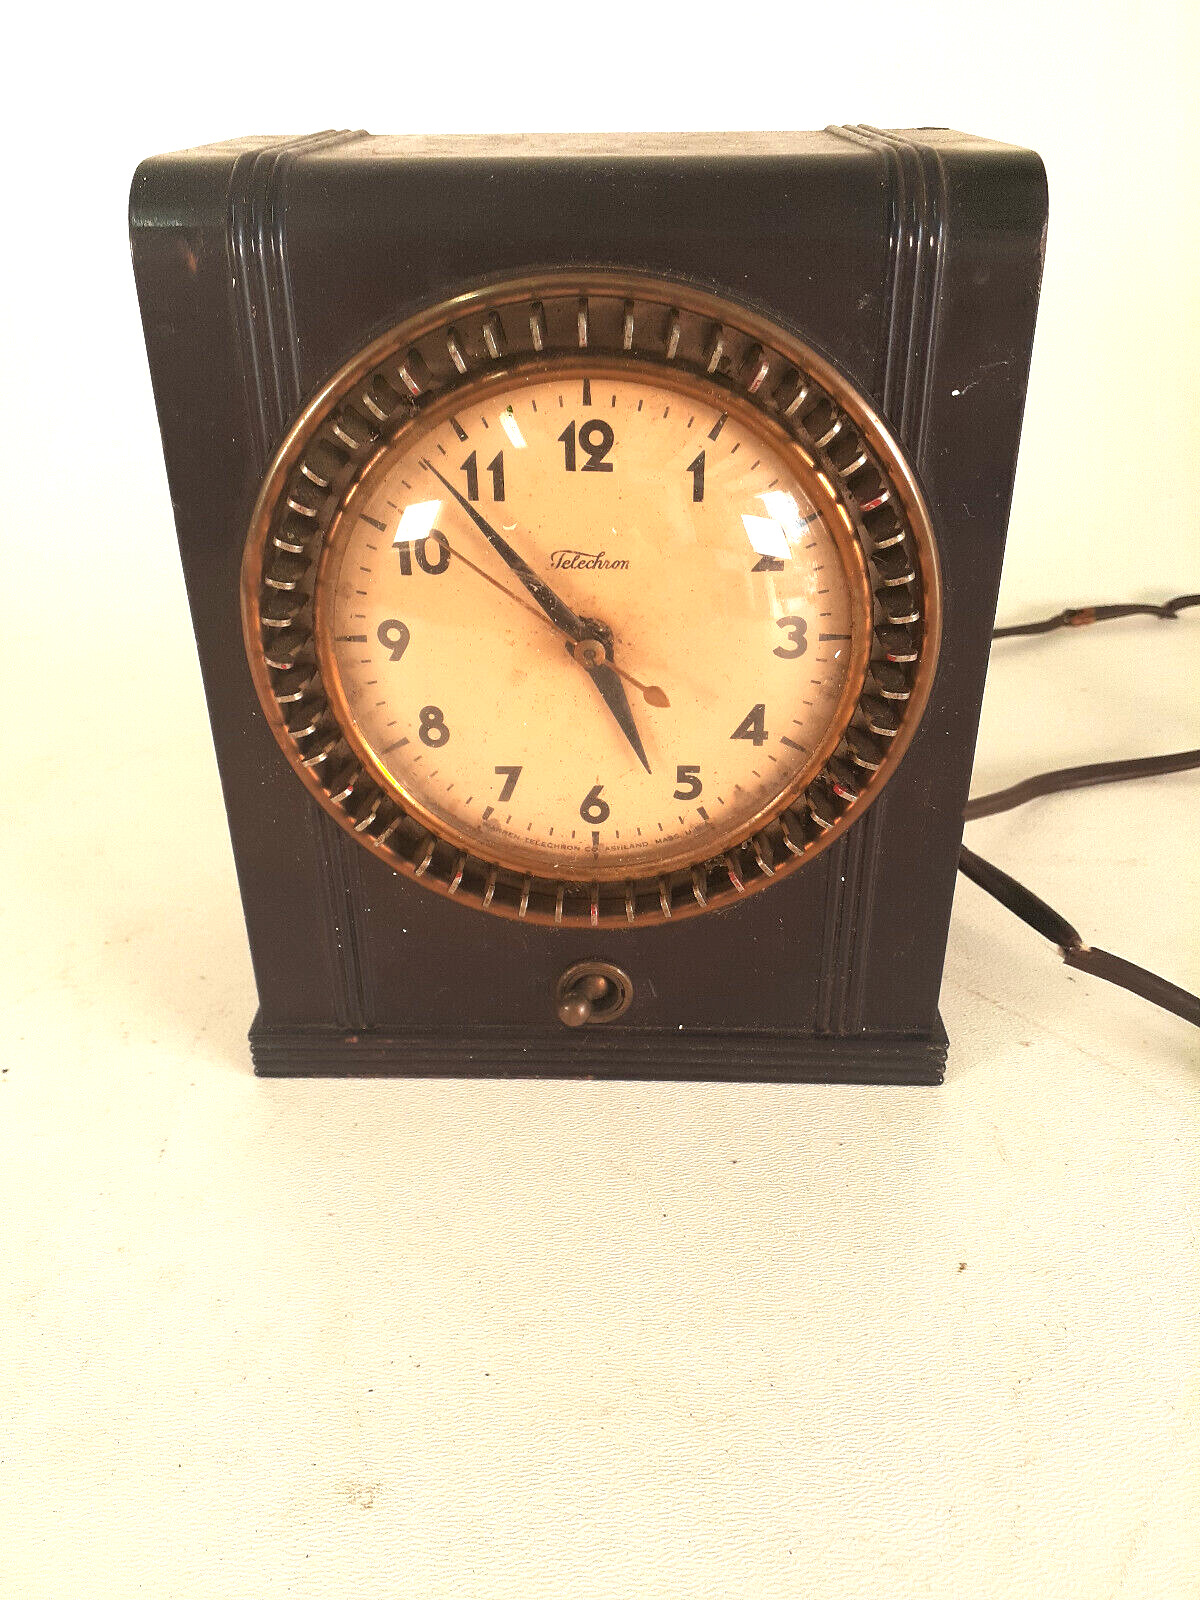 Vintage Warren Telechron Lamp Timer Clock, Bakelite Case, Bad Cord, Parts Only